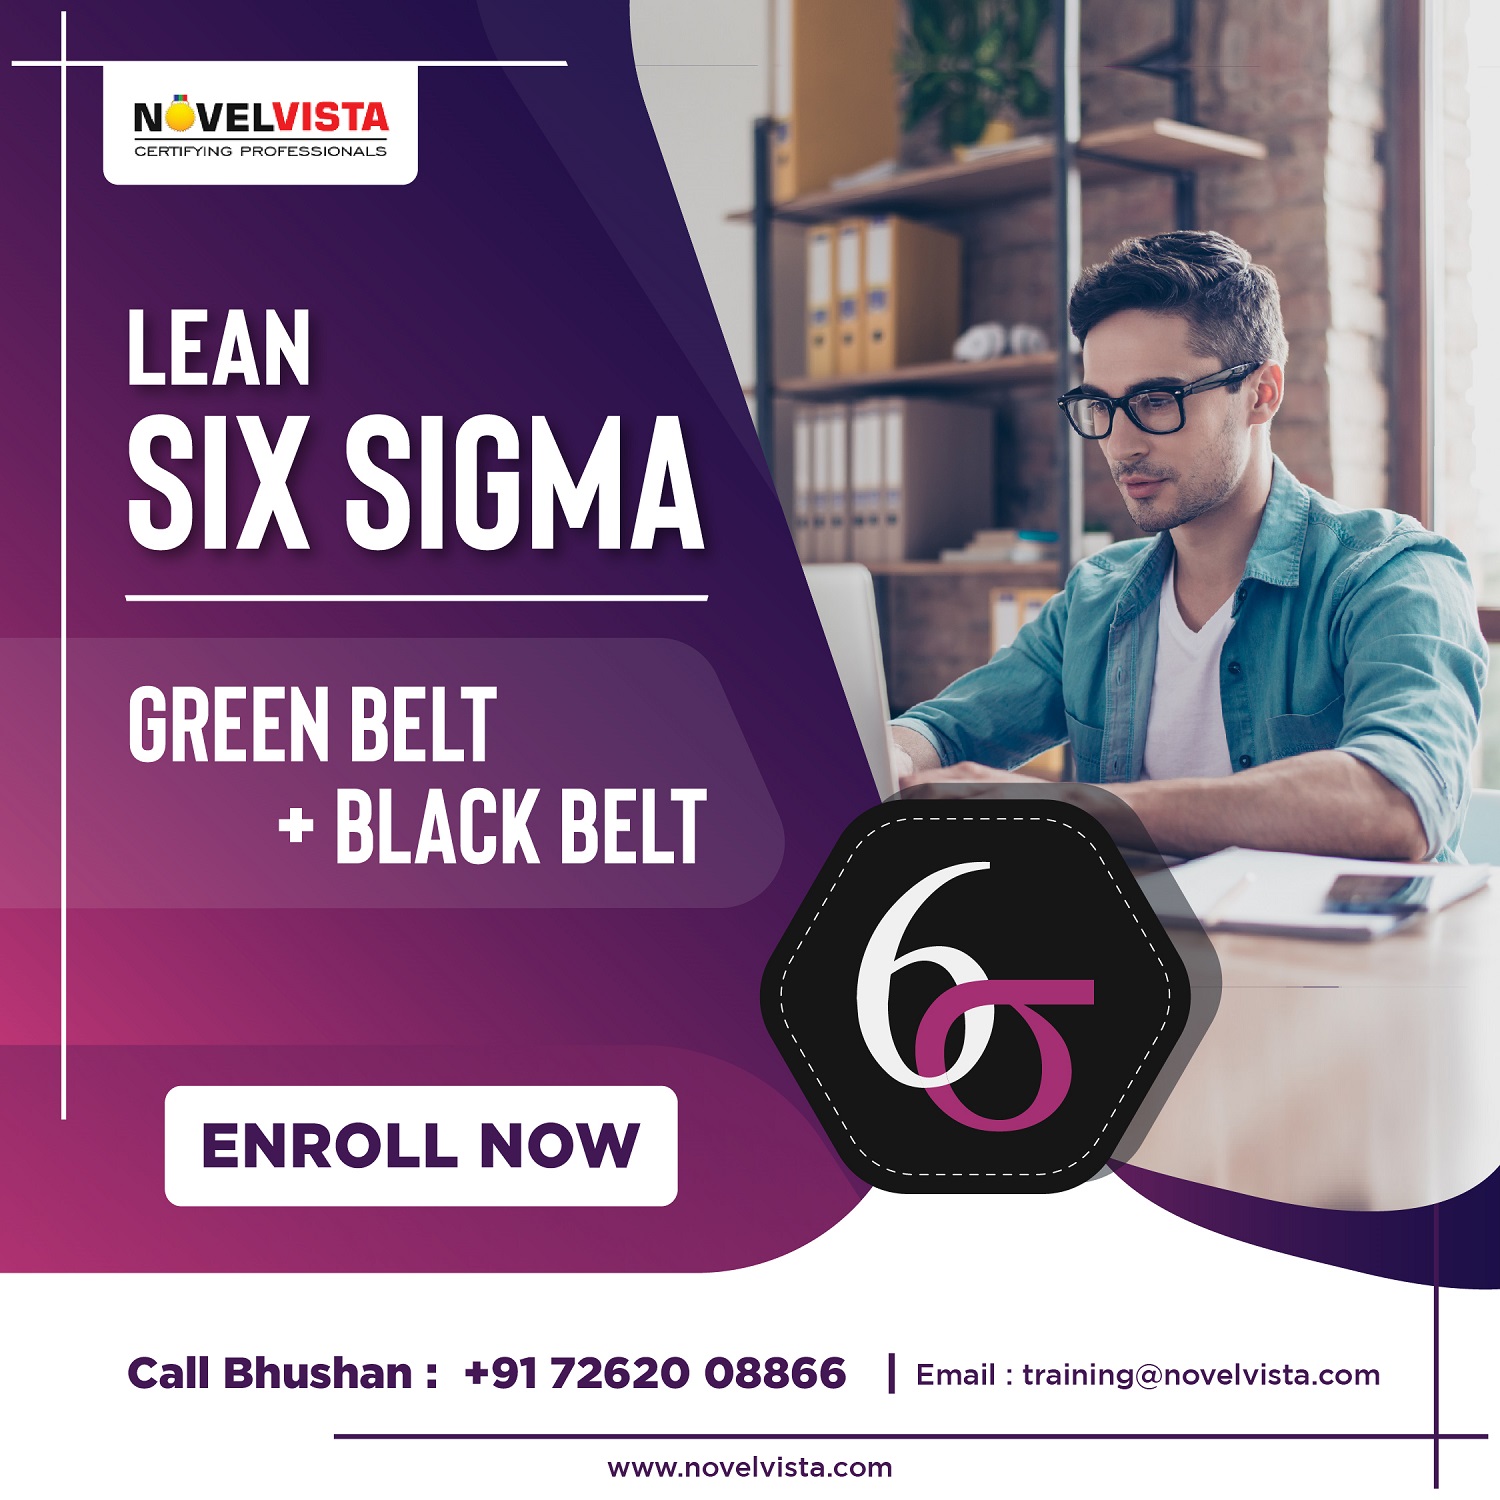 Lean Six Sigma Green Belt + Black Belt Training & Certification, Pune, Maharashtra, India